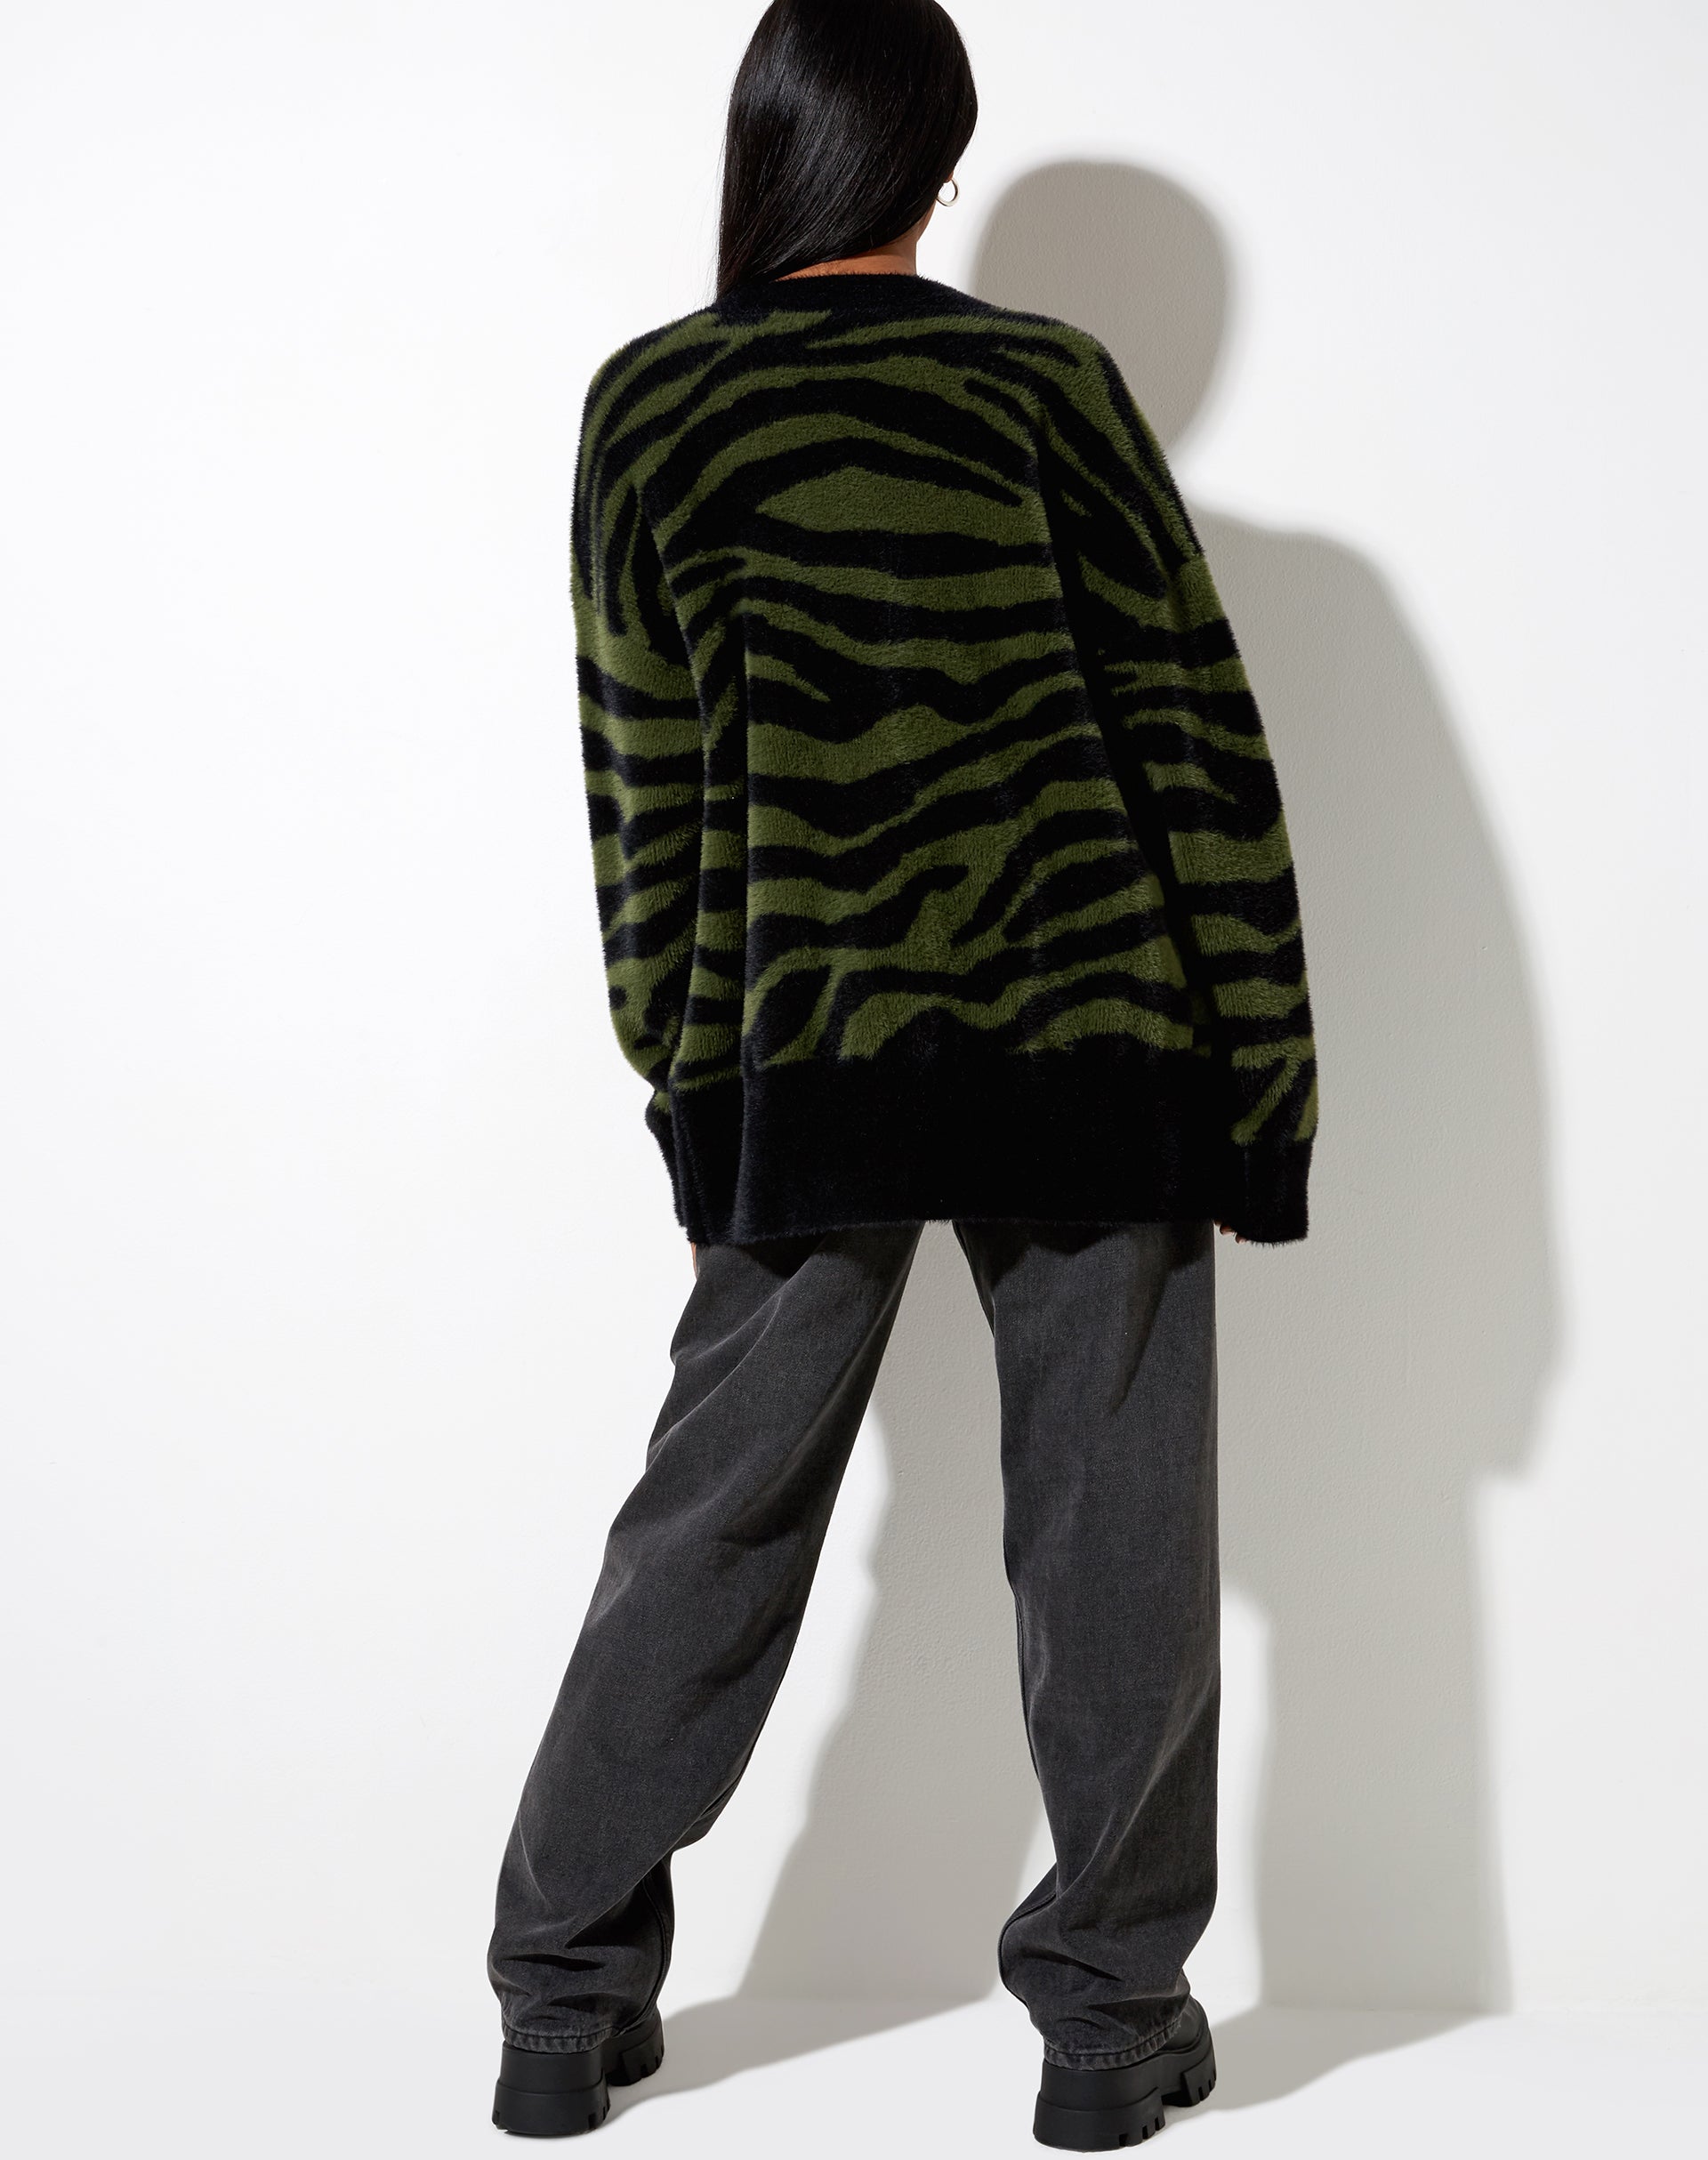 Image of Uriela Cardi in Knit Zebra Olive and Black